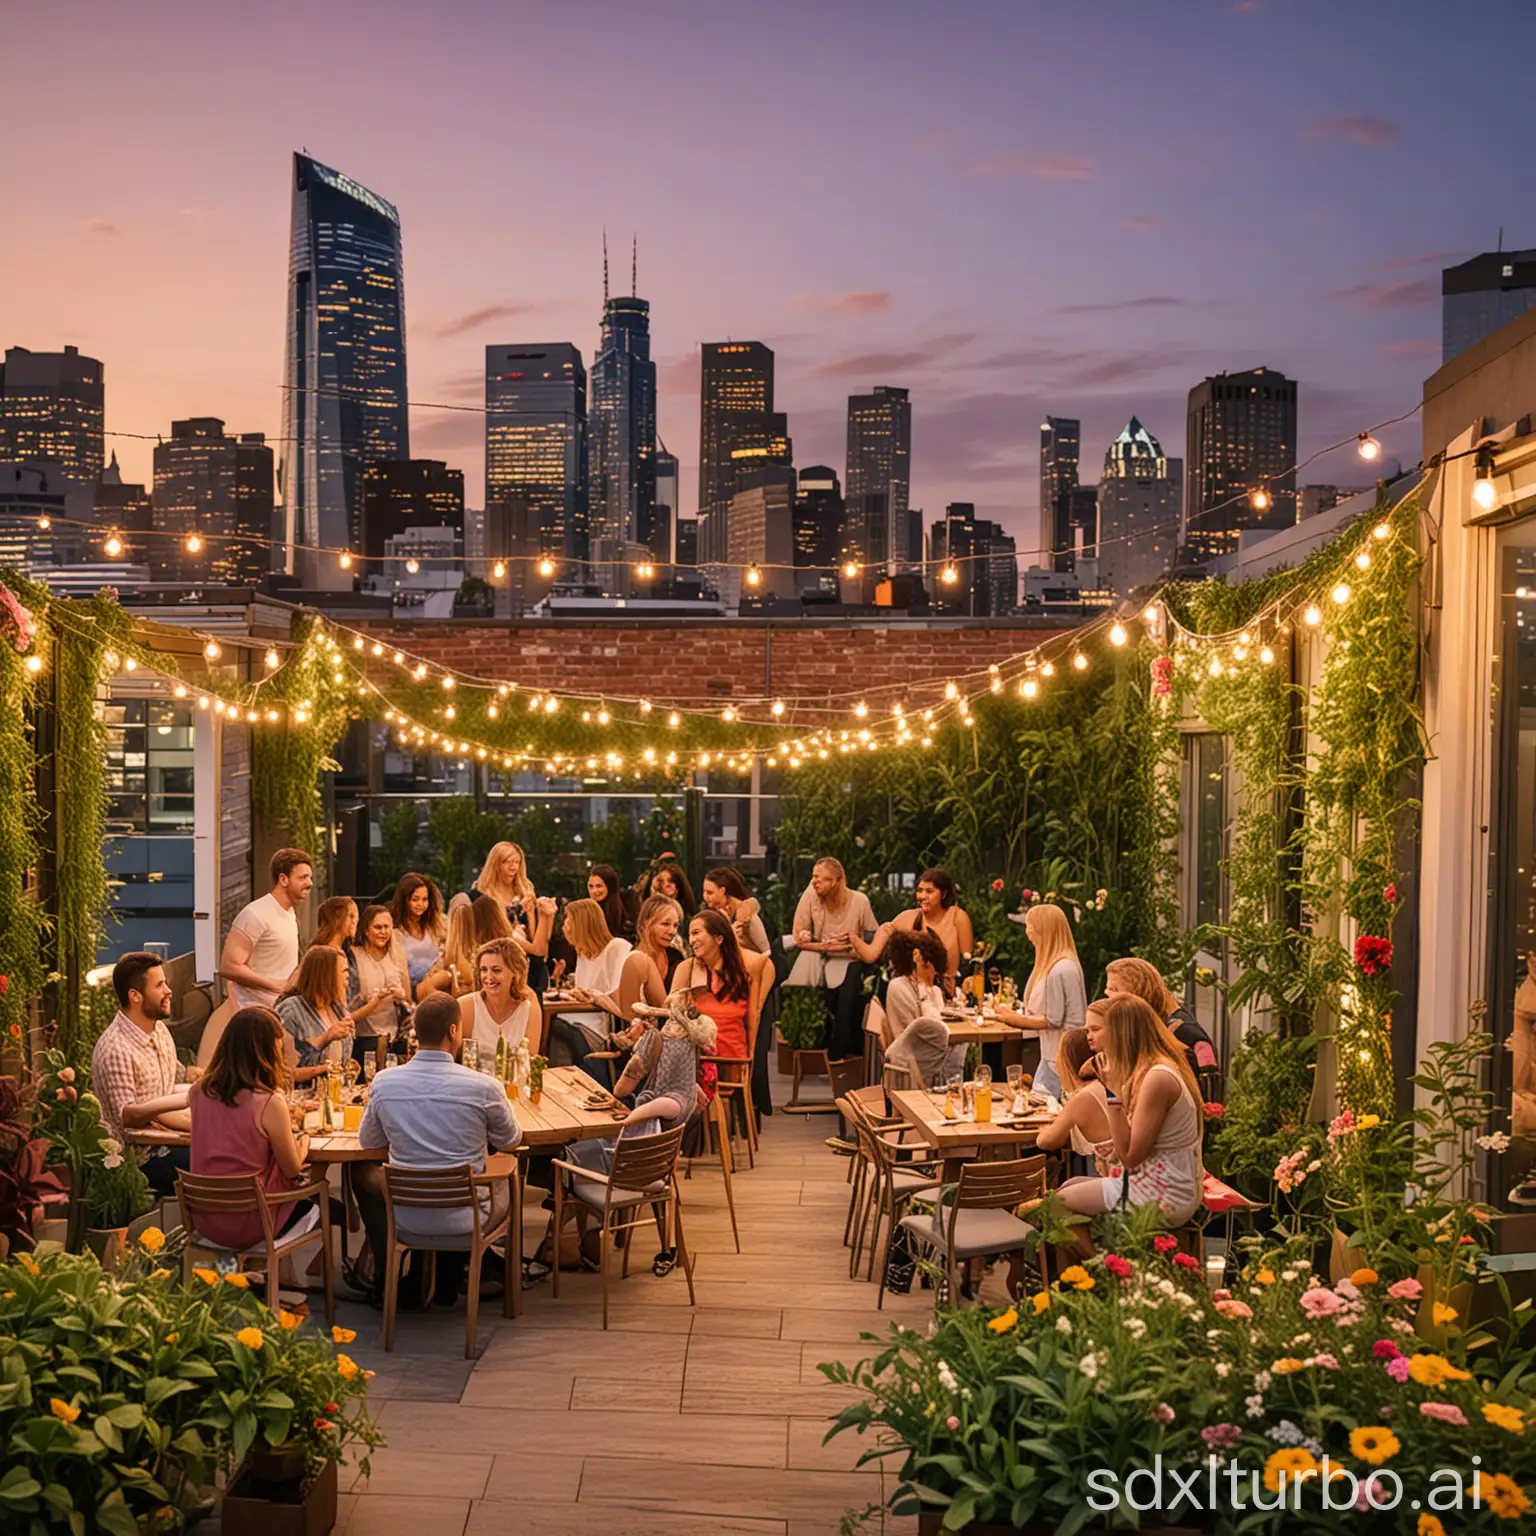 Vibrant-Rooftop-Garden-Party-City-Skyline-Sunset-Social-Gathering